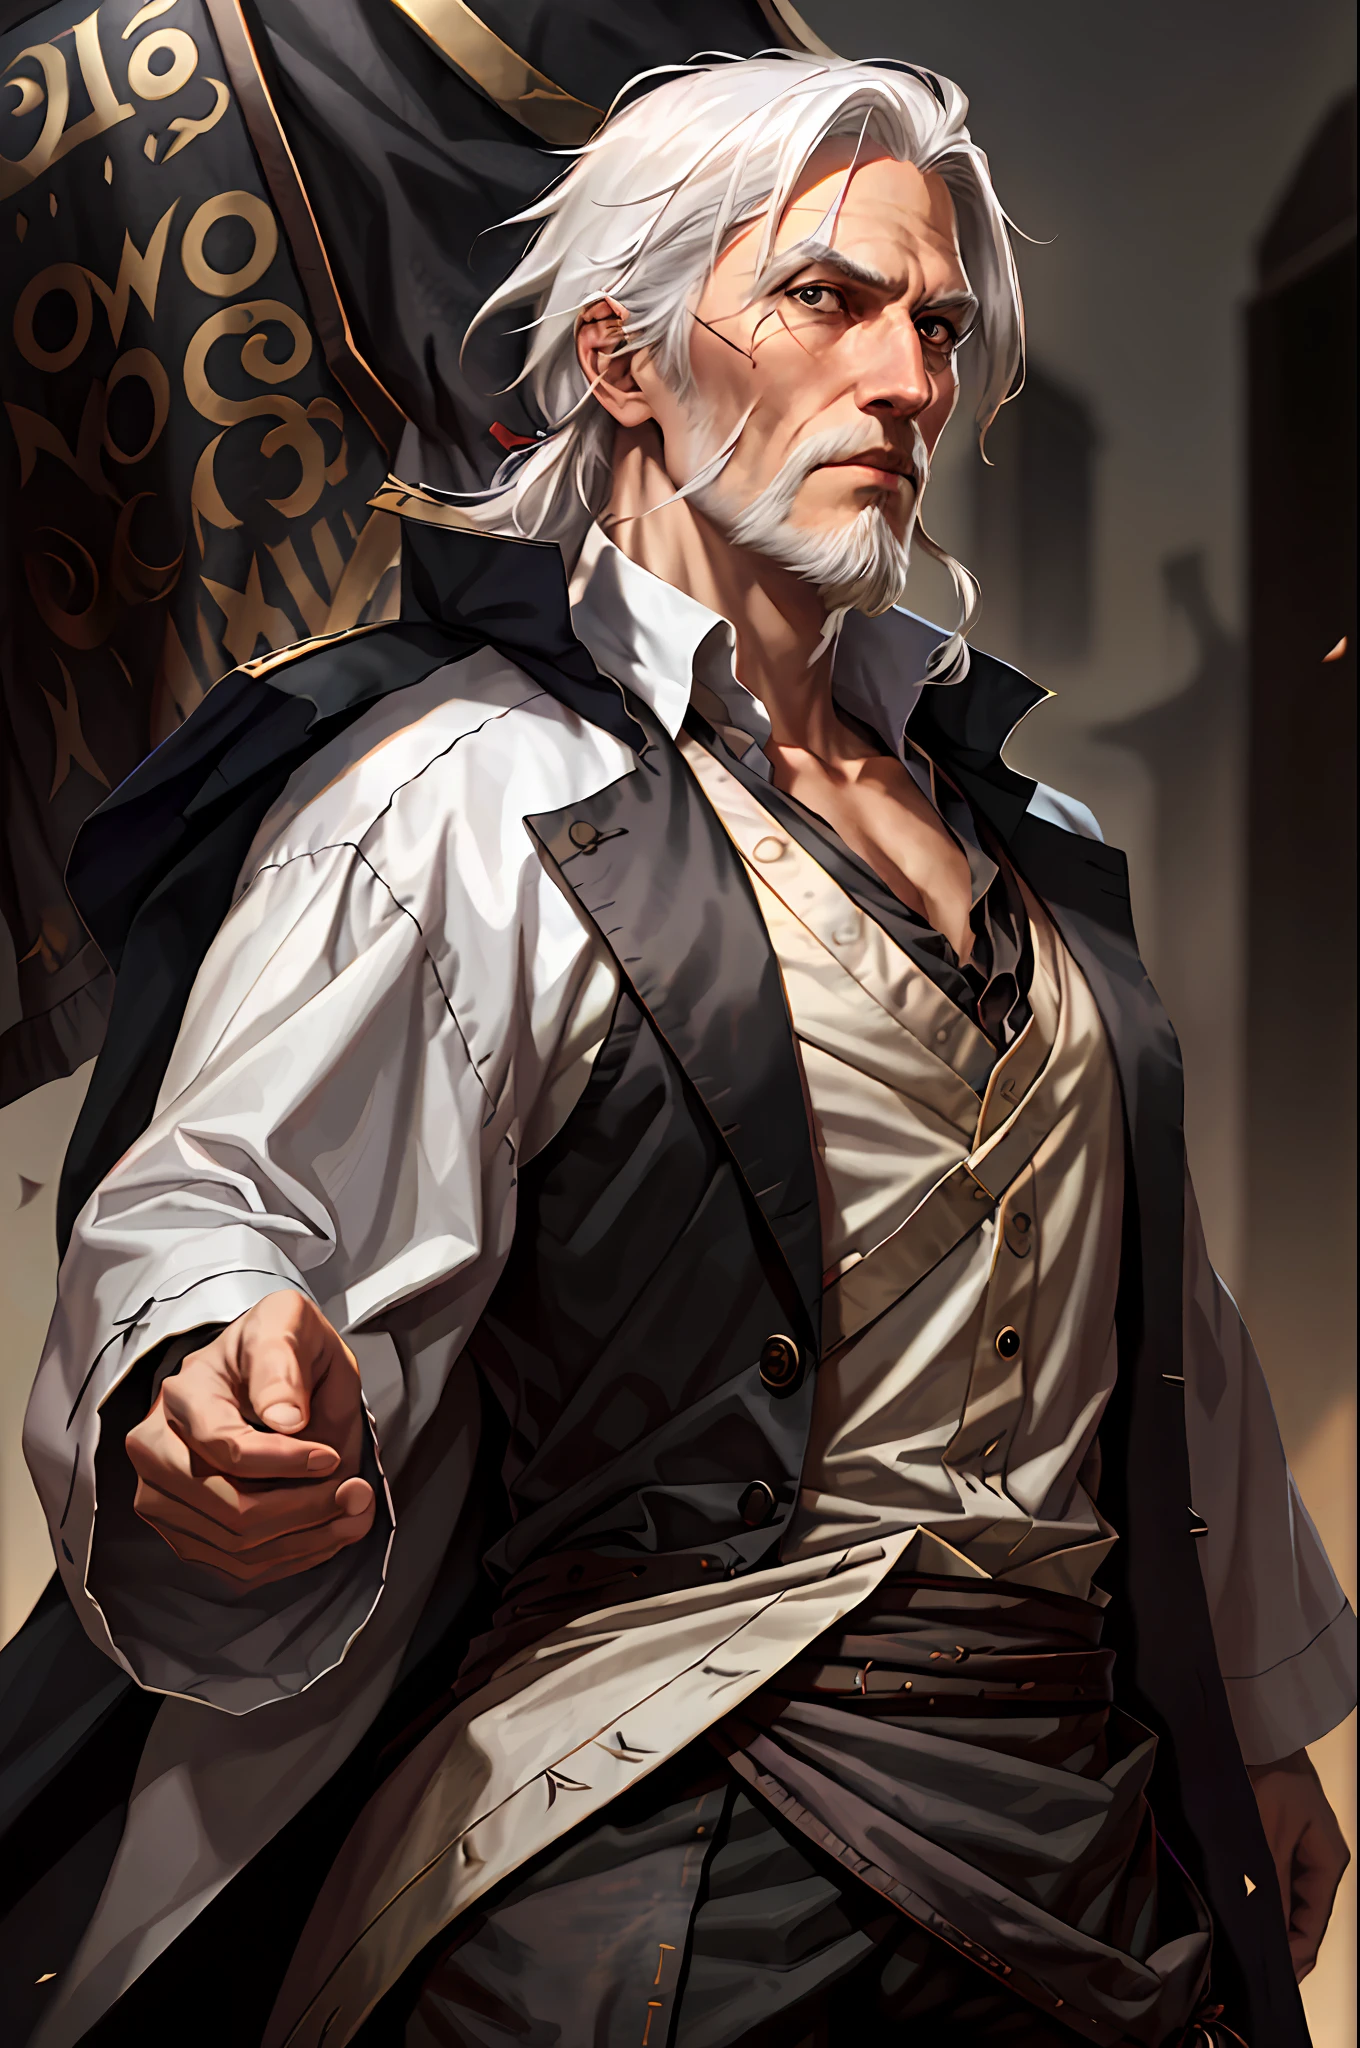 hombre, pirata, inglés, pelo blanco liso, barba blanca, scar on eye, fuerte y alto, relativamente viejo, ropa negra.